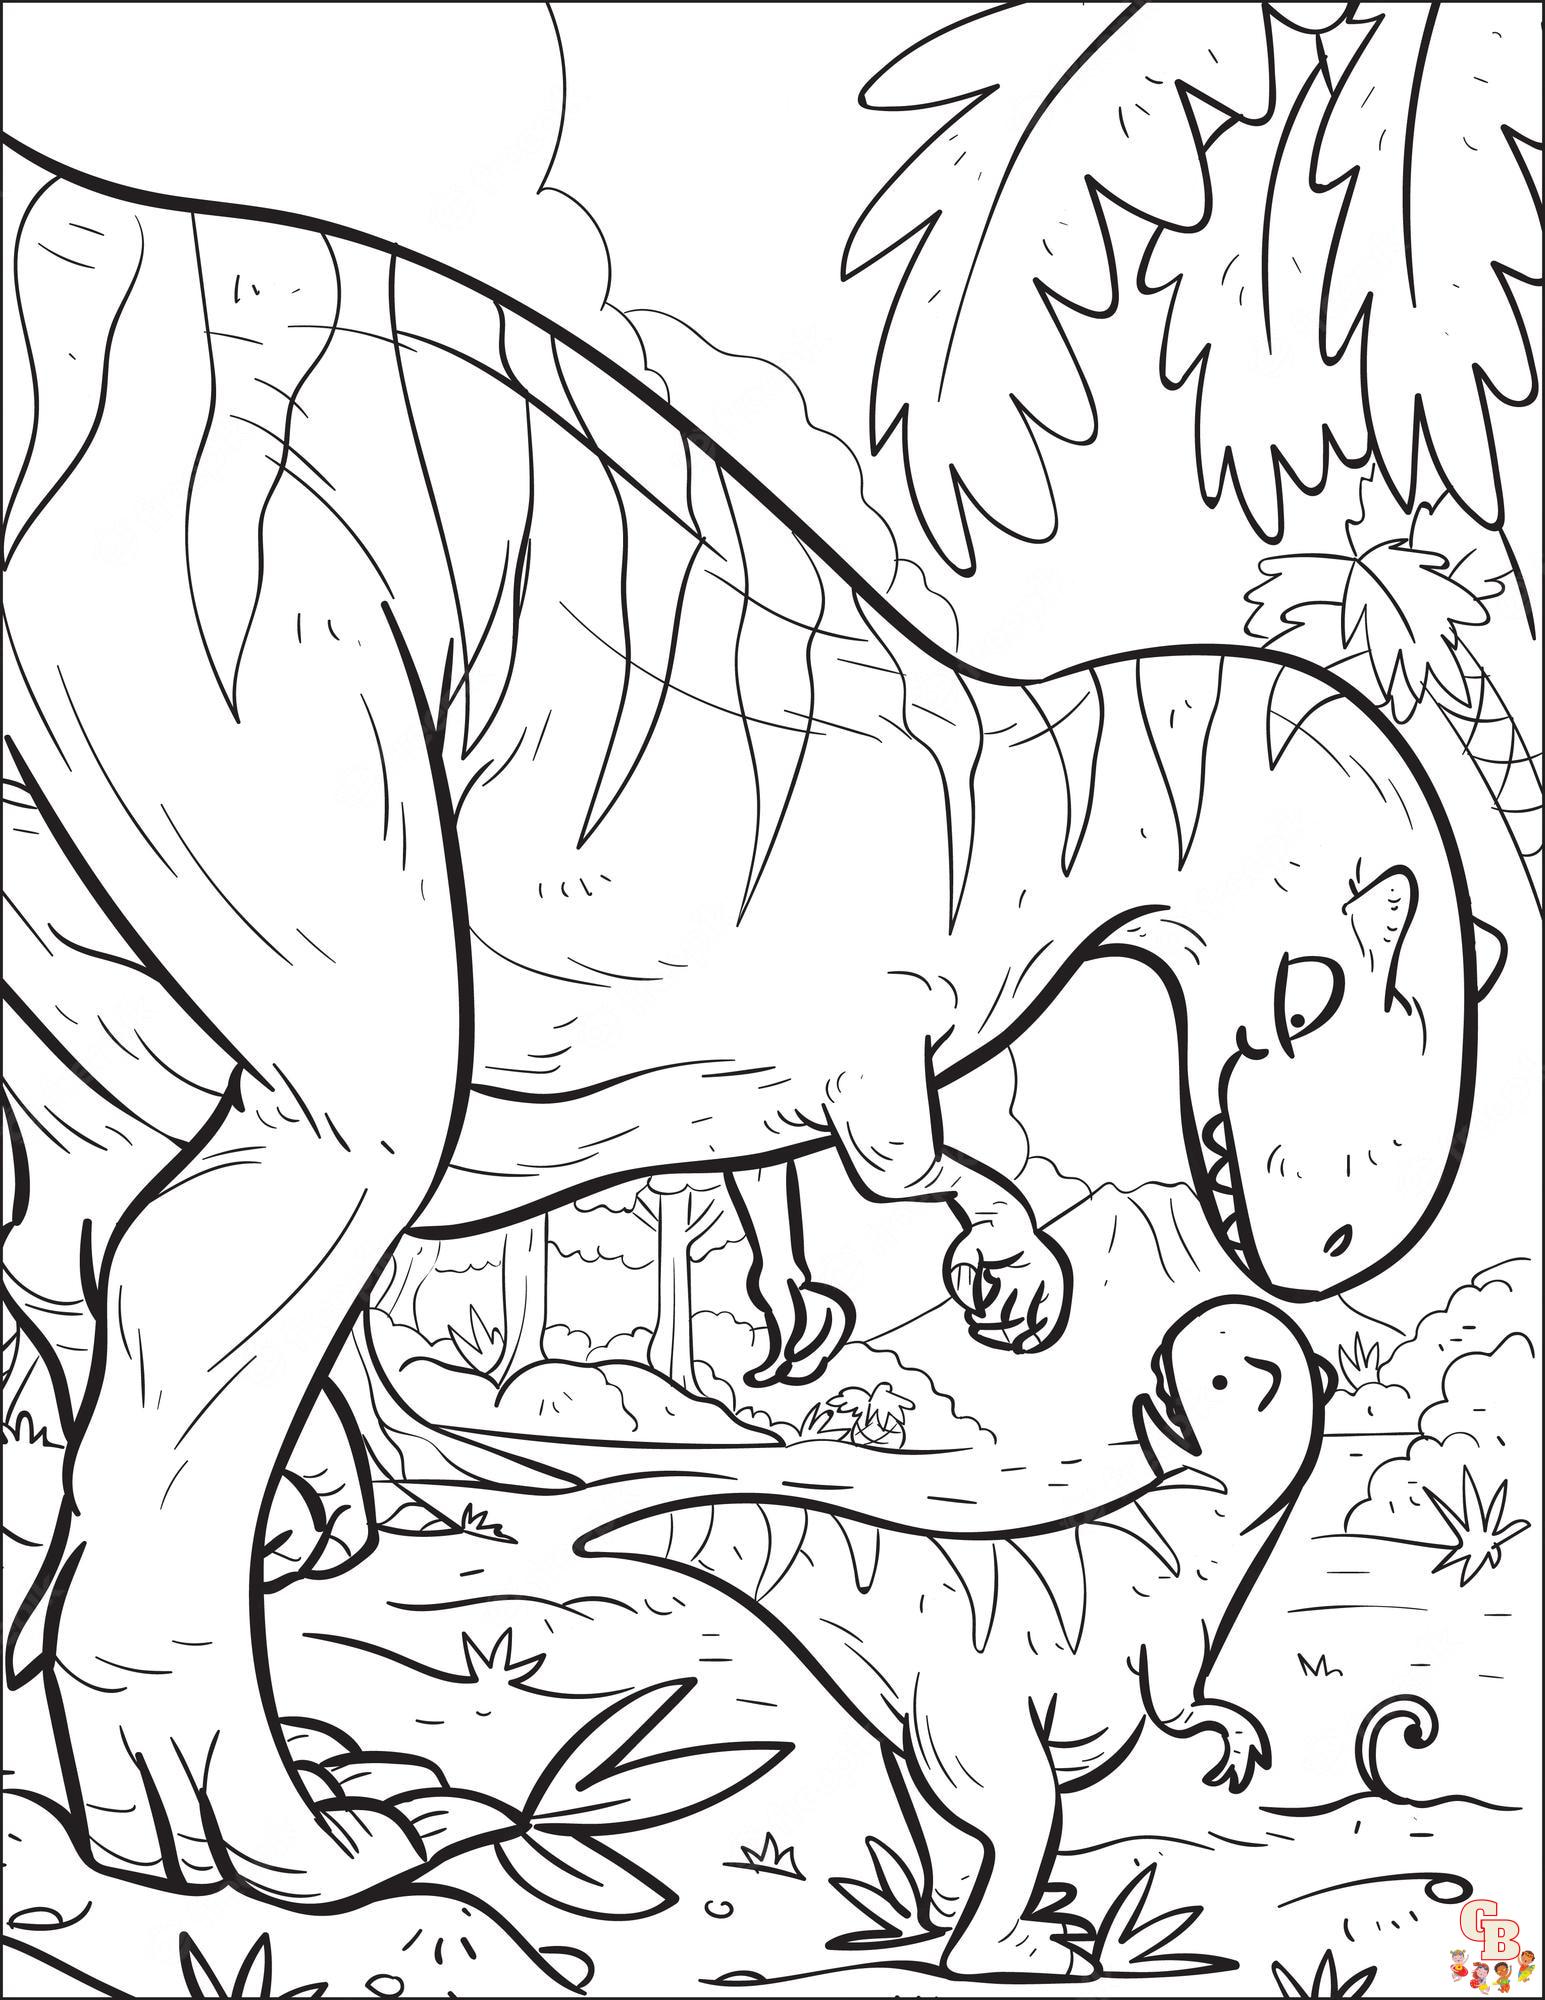 Allosaurus Ausmalbilder fuer kinder